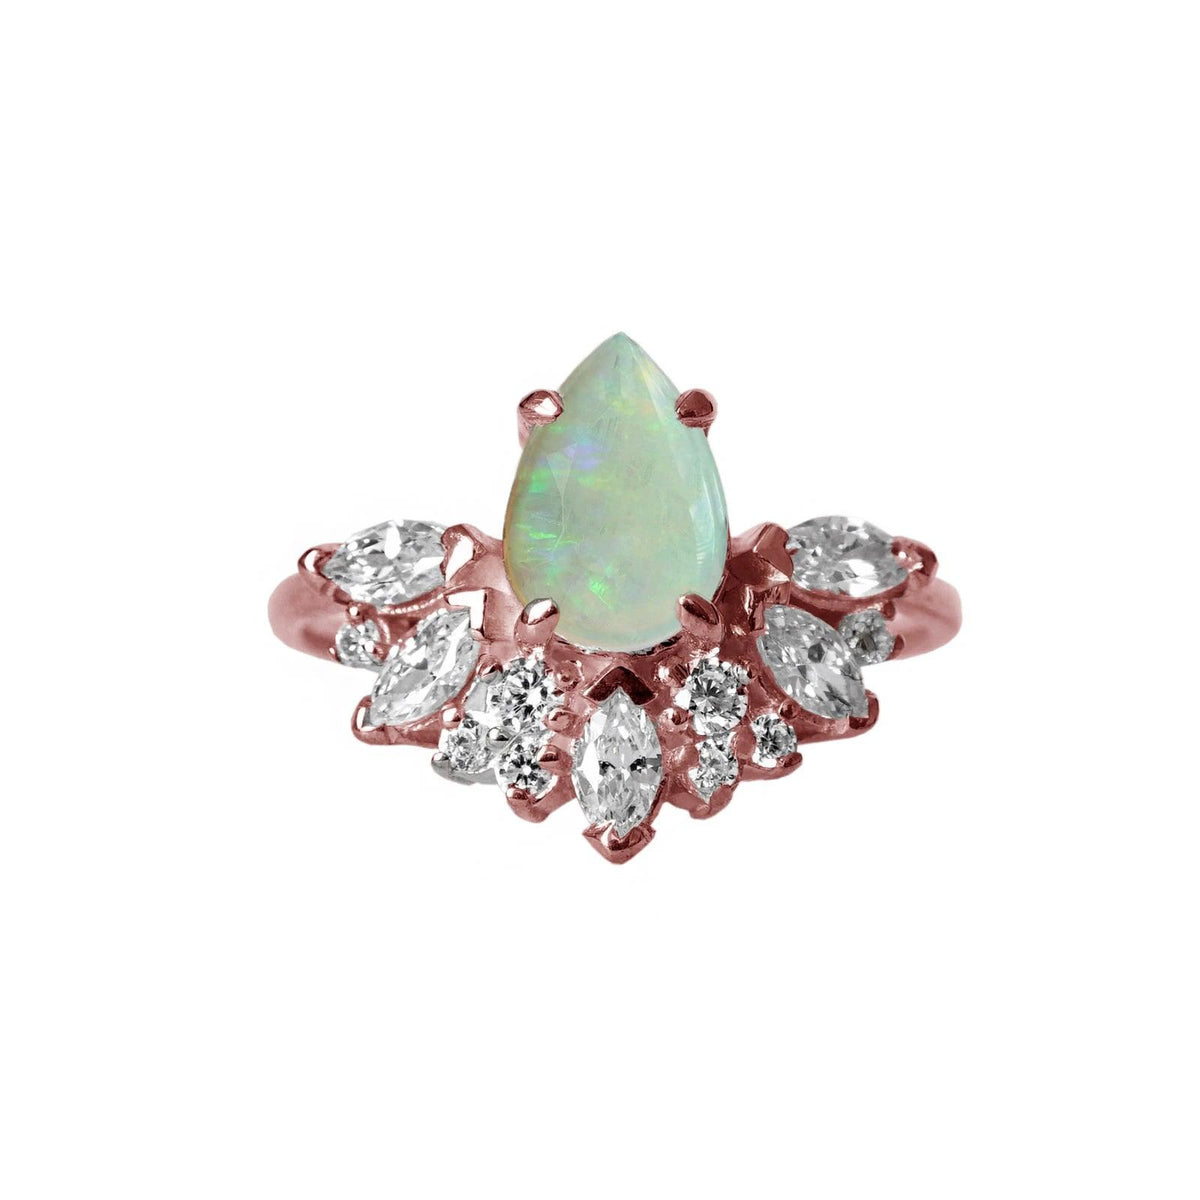 Parisian Opal Ring - Tippy Taste Jewelry